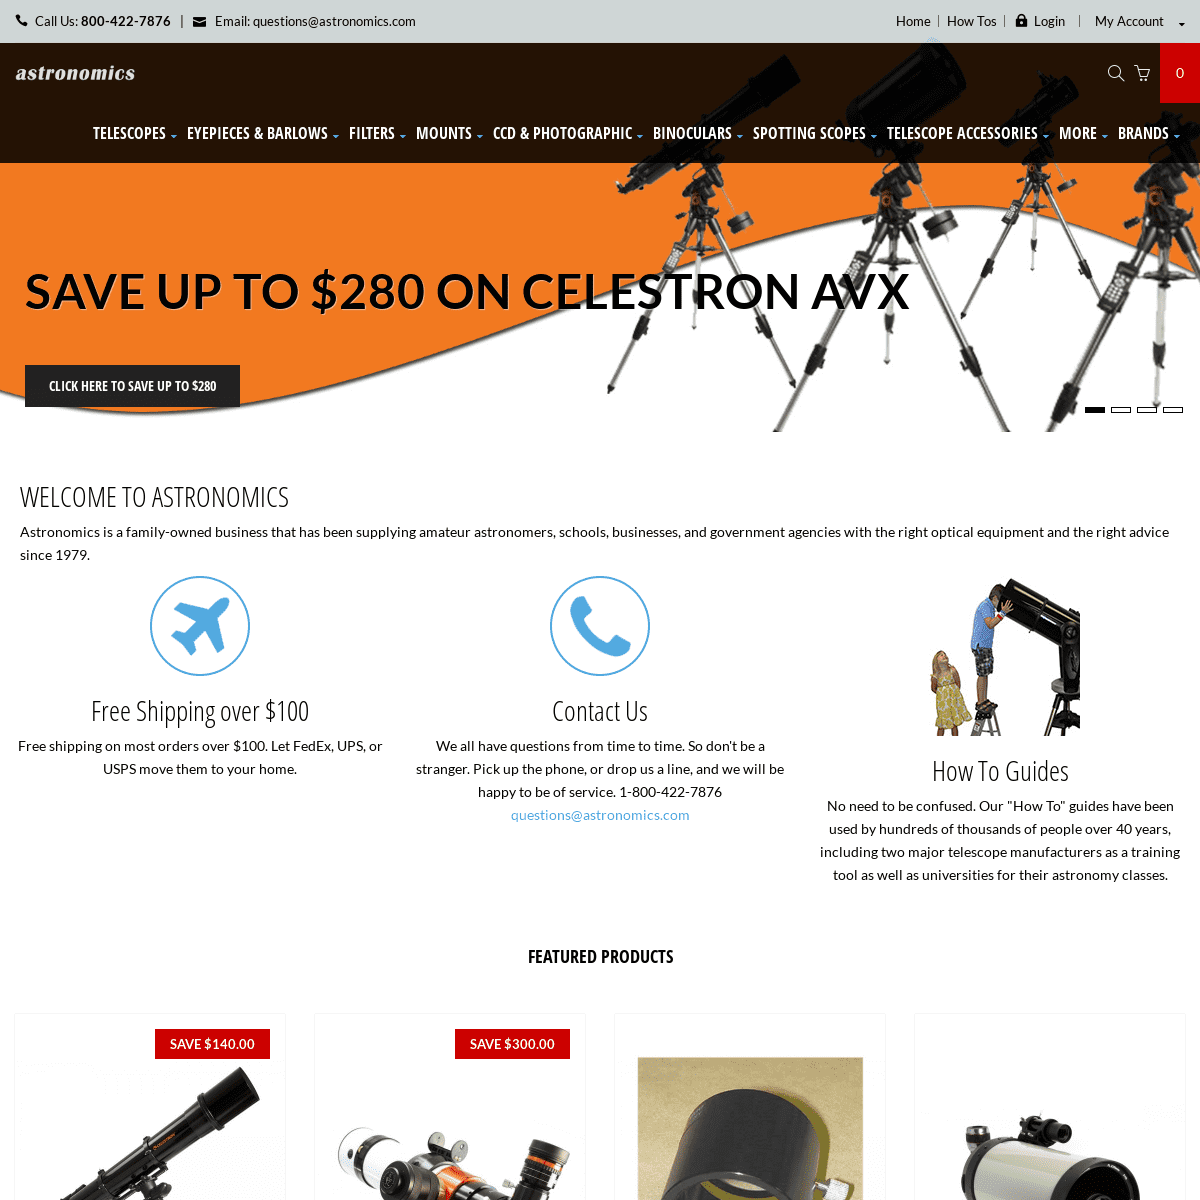 A complete backup of astronomics.com